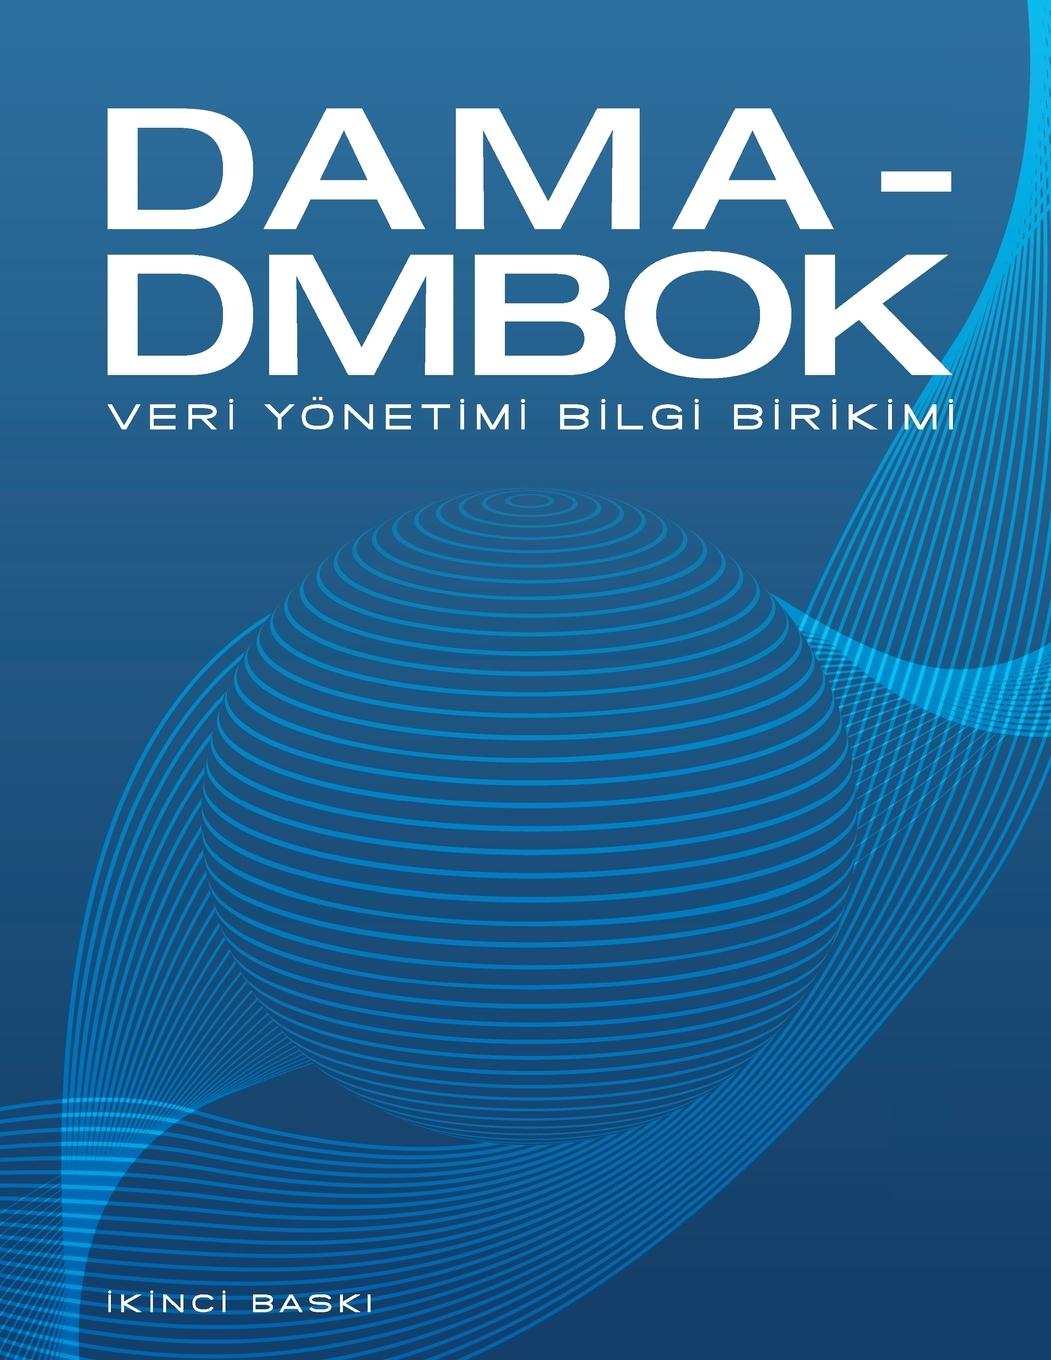 Book DAMA-DMBOK Turkish 